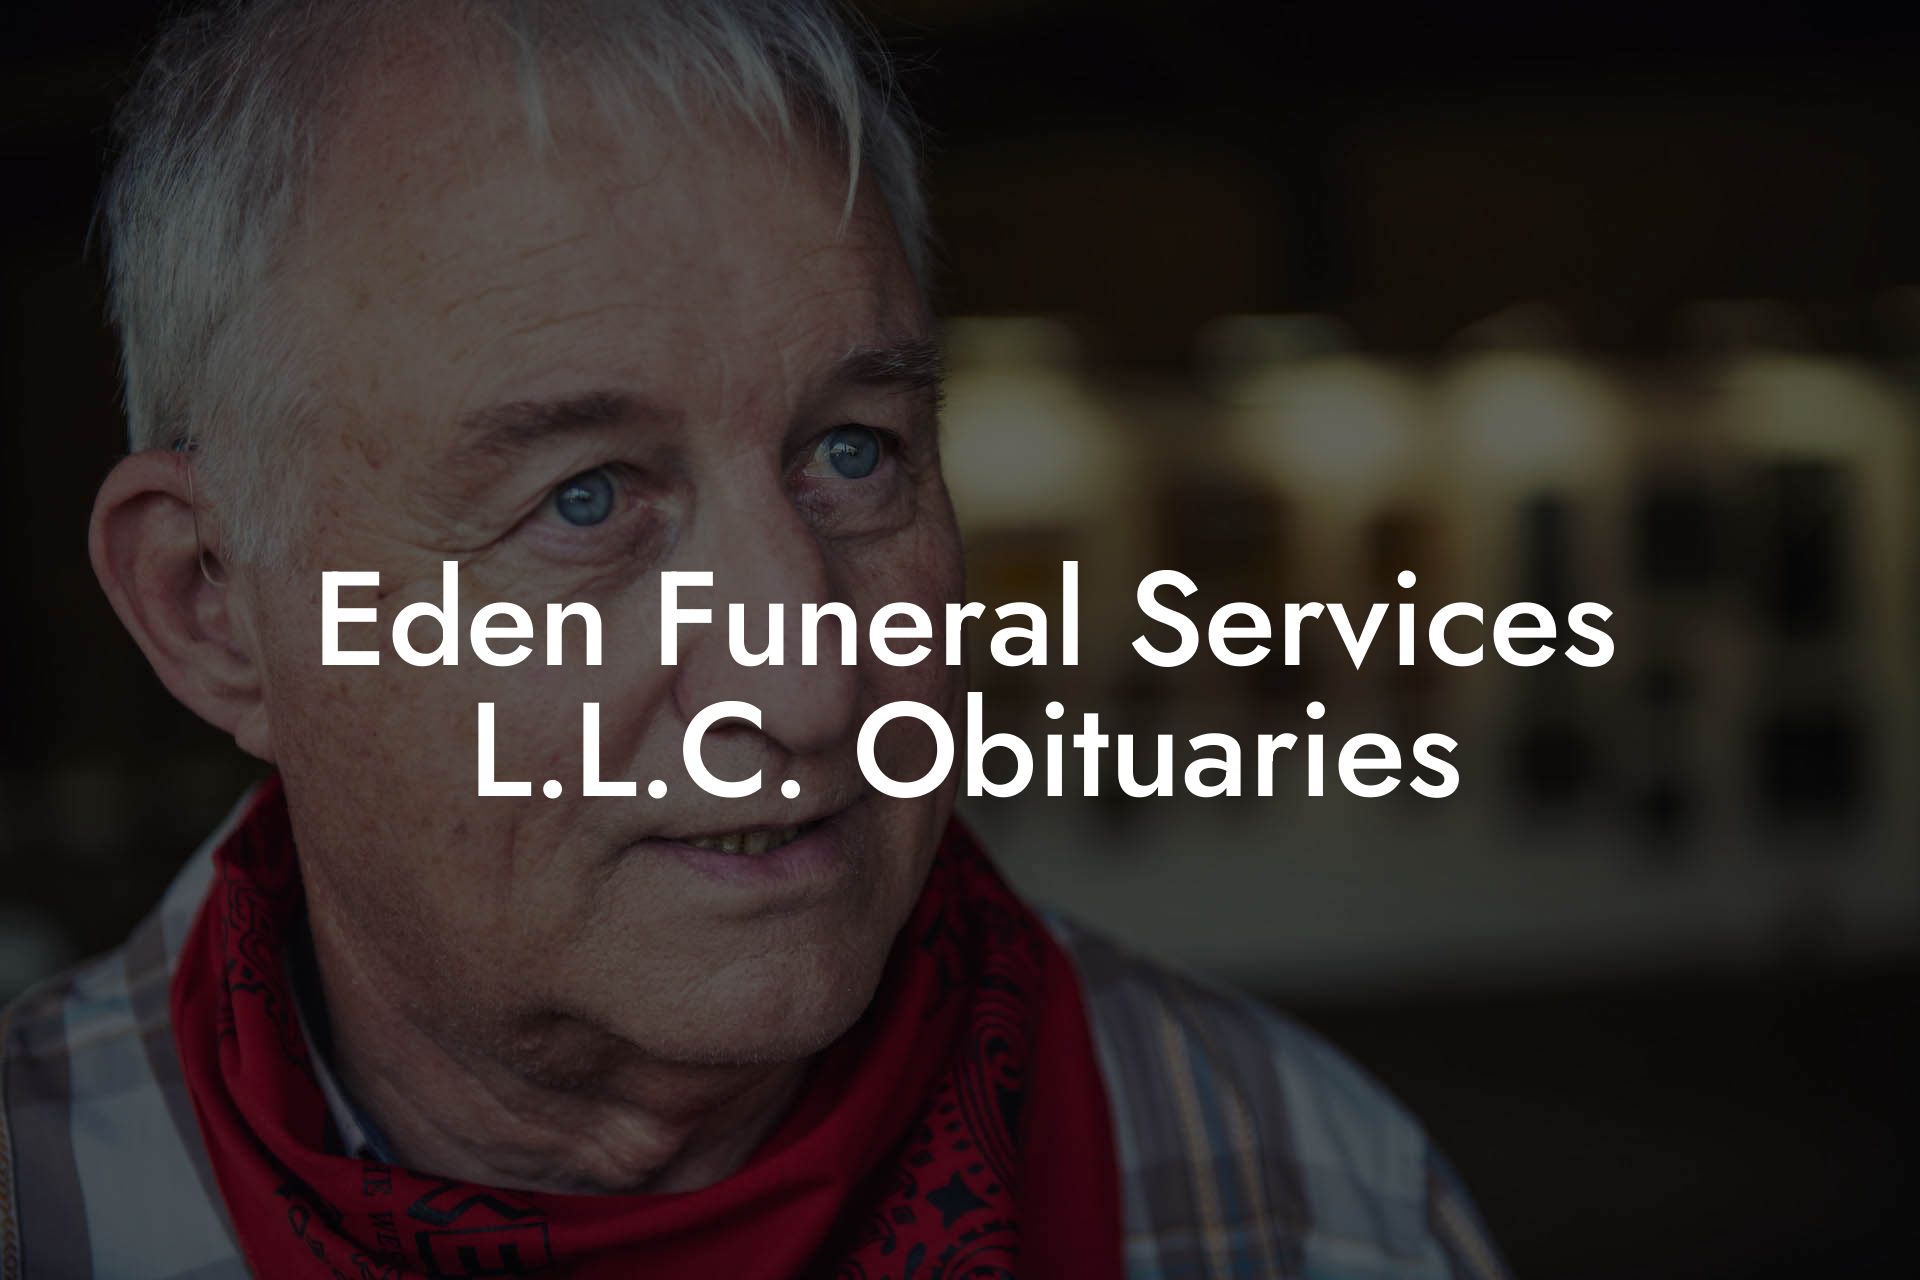 Eden Funeral Services L.L.C. Obituaries